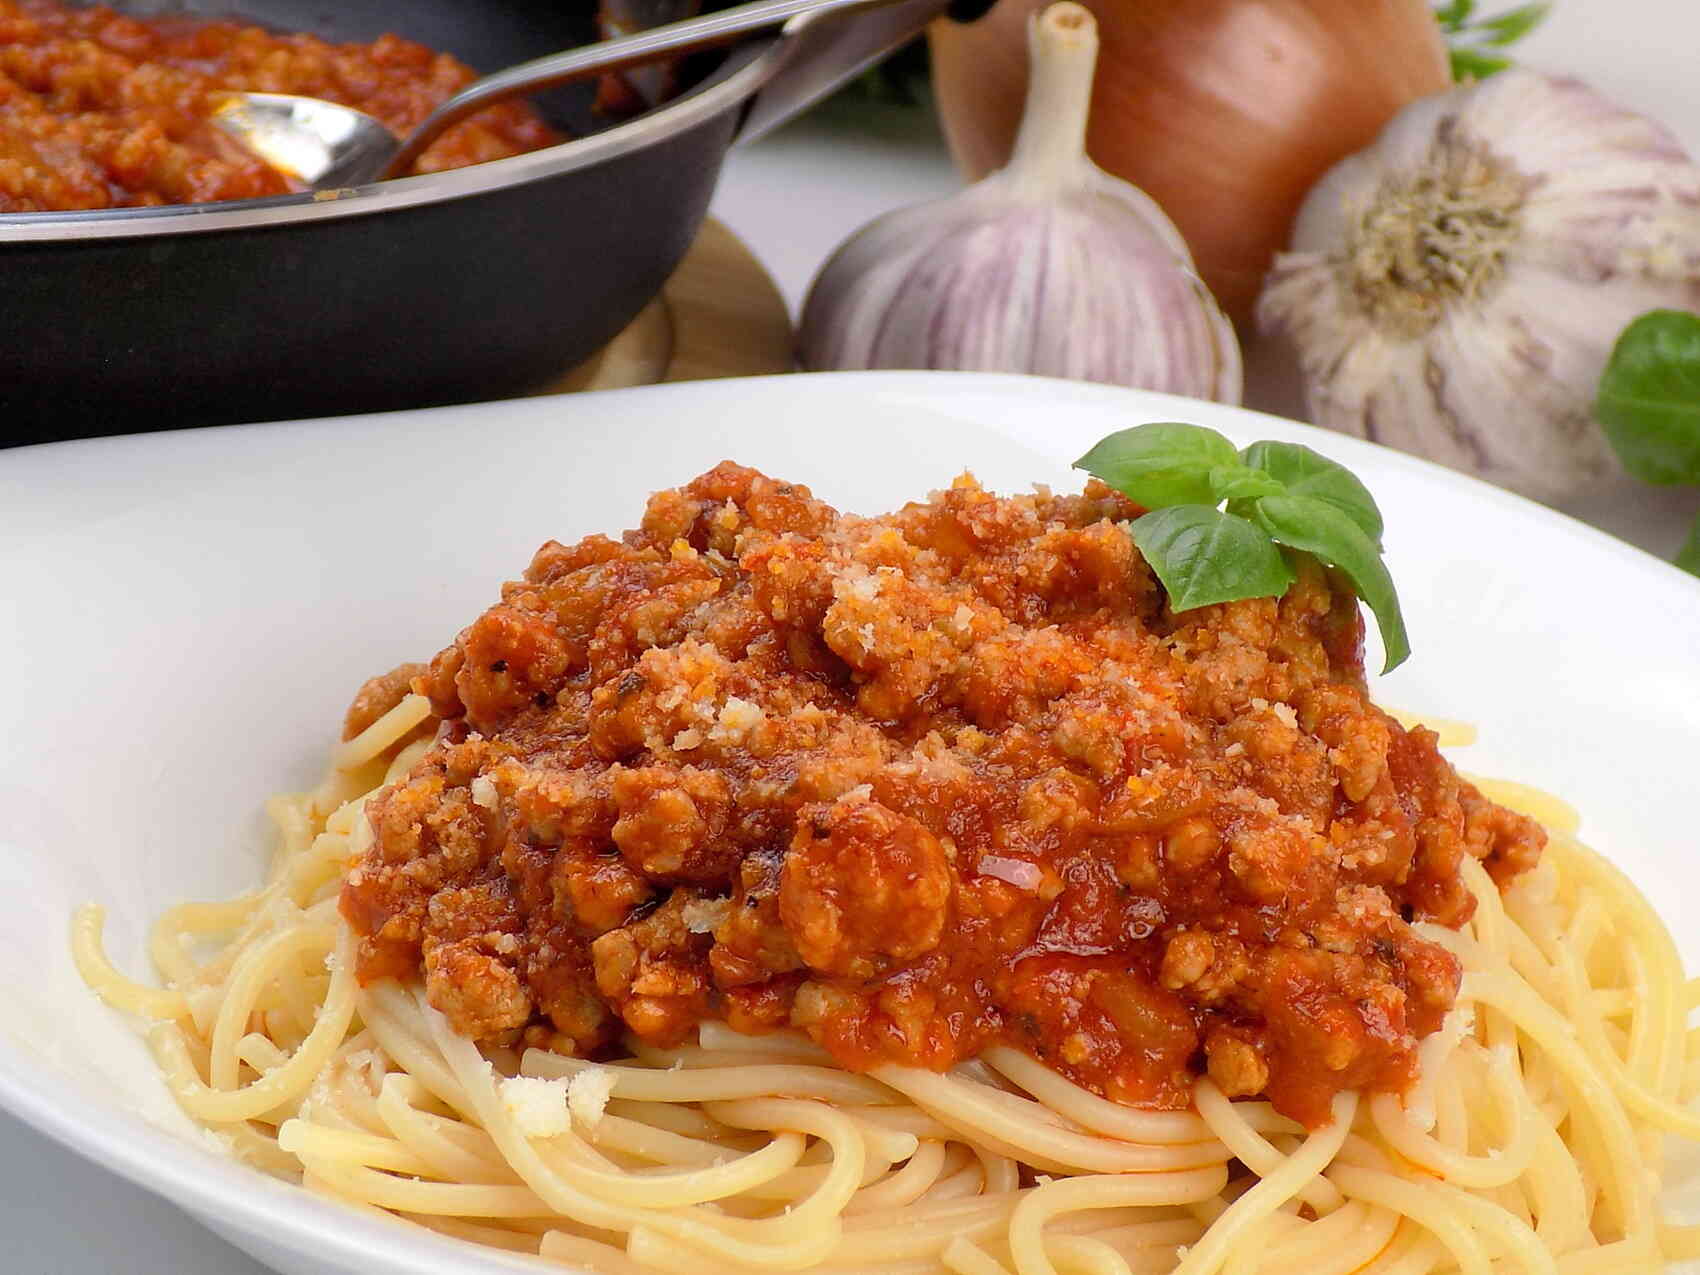 Przepis na spaghetti z mięsem mielonym